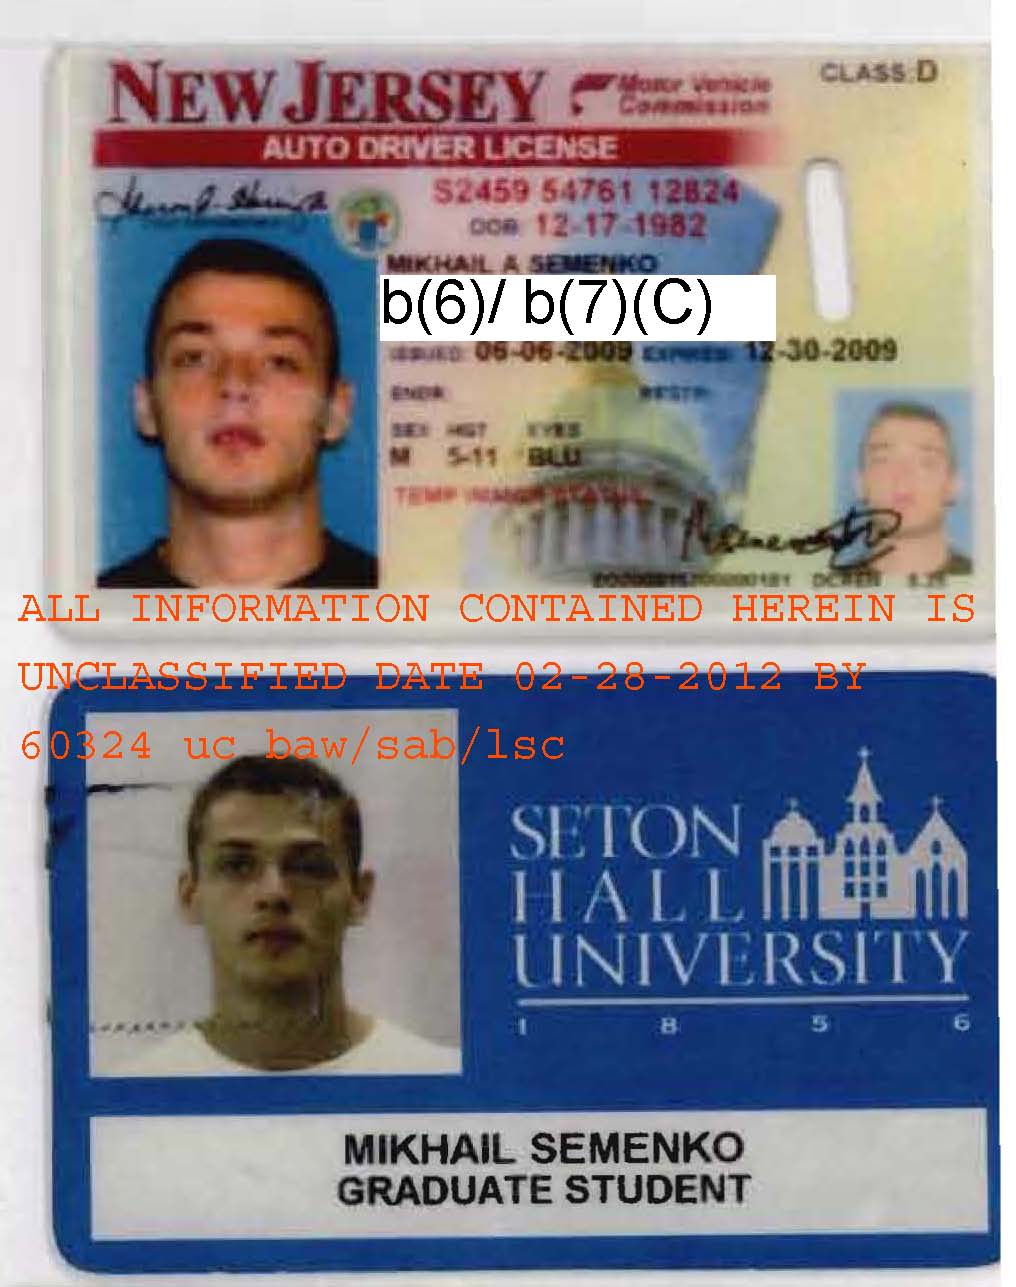 Mikhail Semenko's New Jersey Driver's License and Seton Hall ID Card